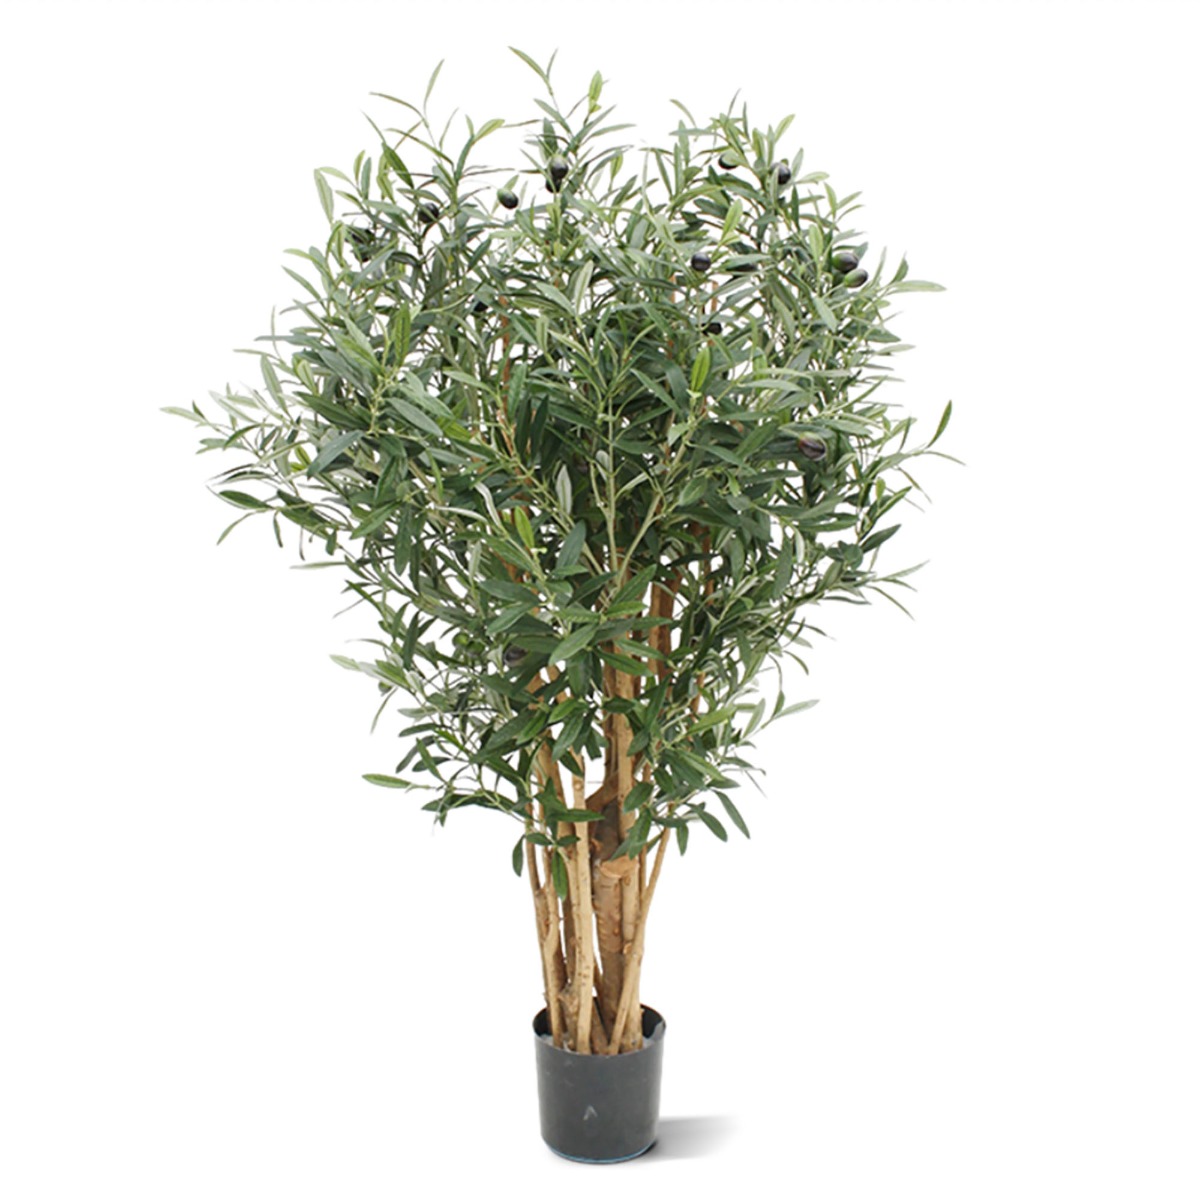 Oliven Kunstbaum deluxe 100 cm unter Grüne Kunstpflanzen